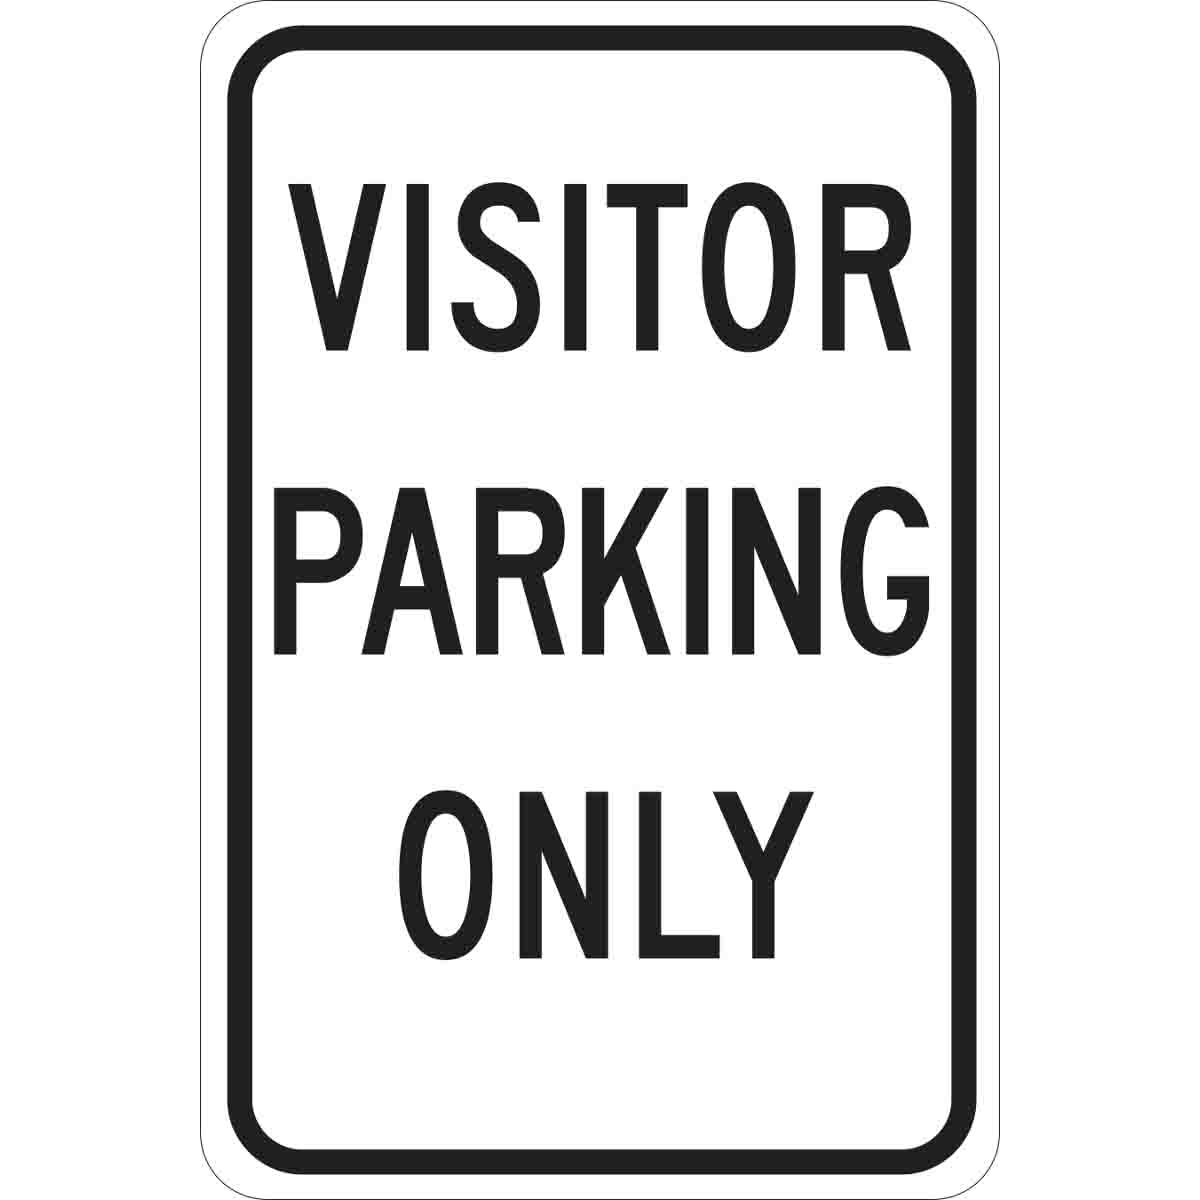 12 Width 18 Height Red on White LegendNo Parking School Days Brady 129747 Traffic Control Sign 